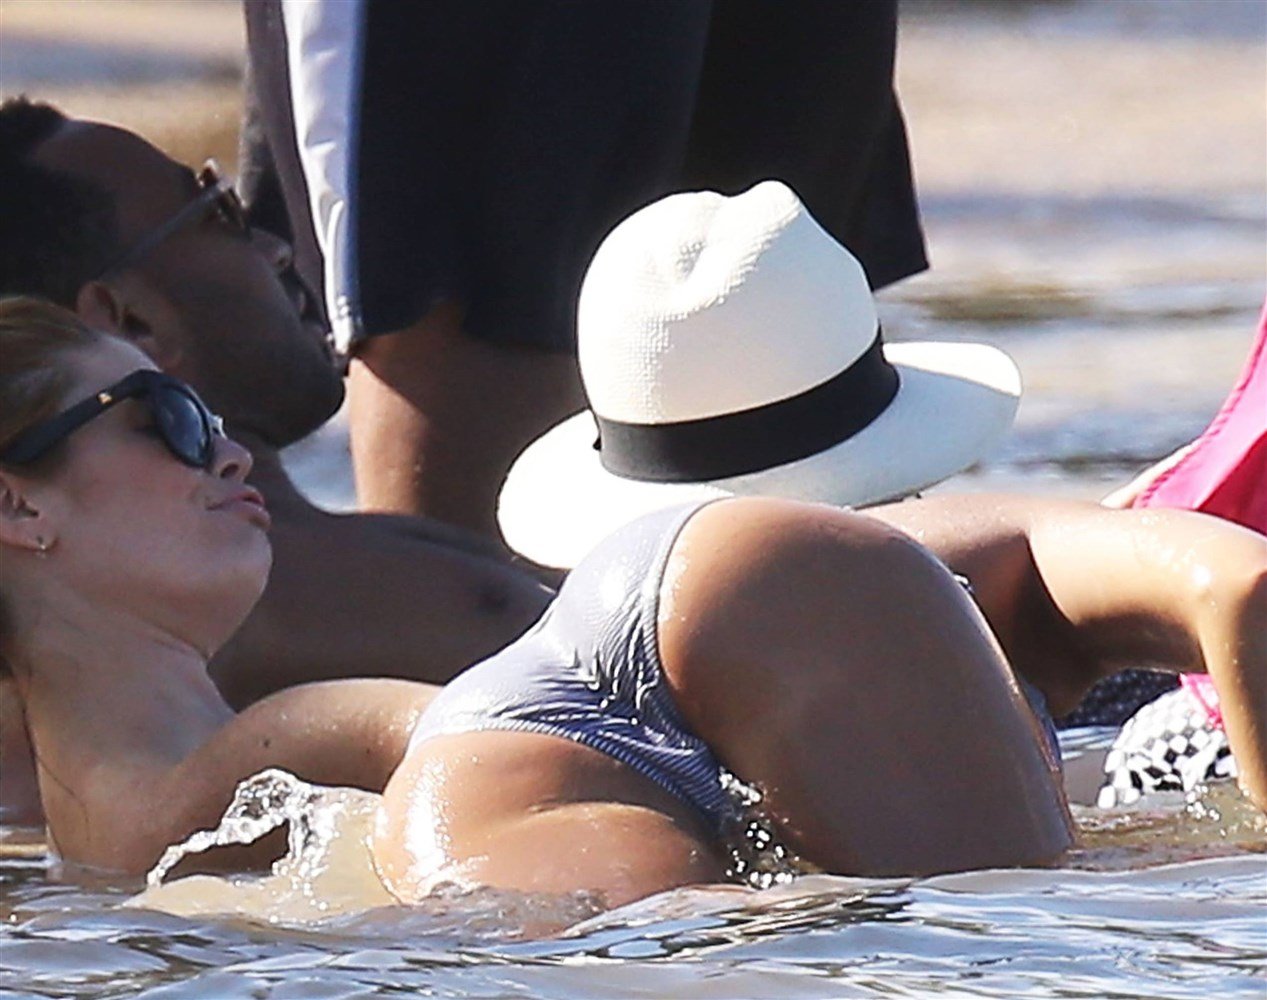 New Pics Of Jessica Alba’s Hard Nips And Tight Ass In A Bikini